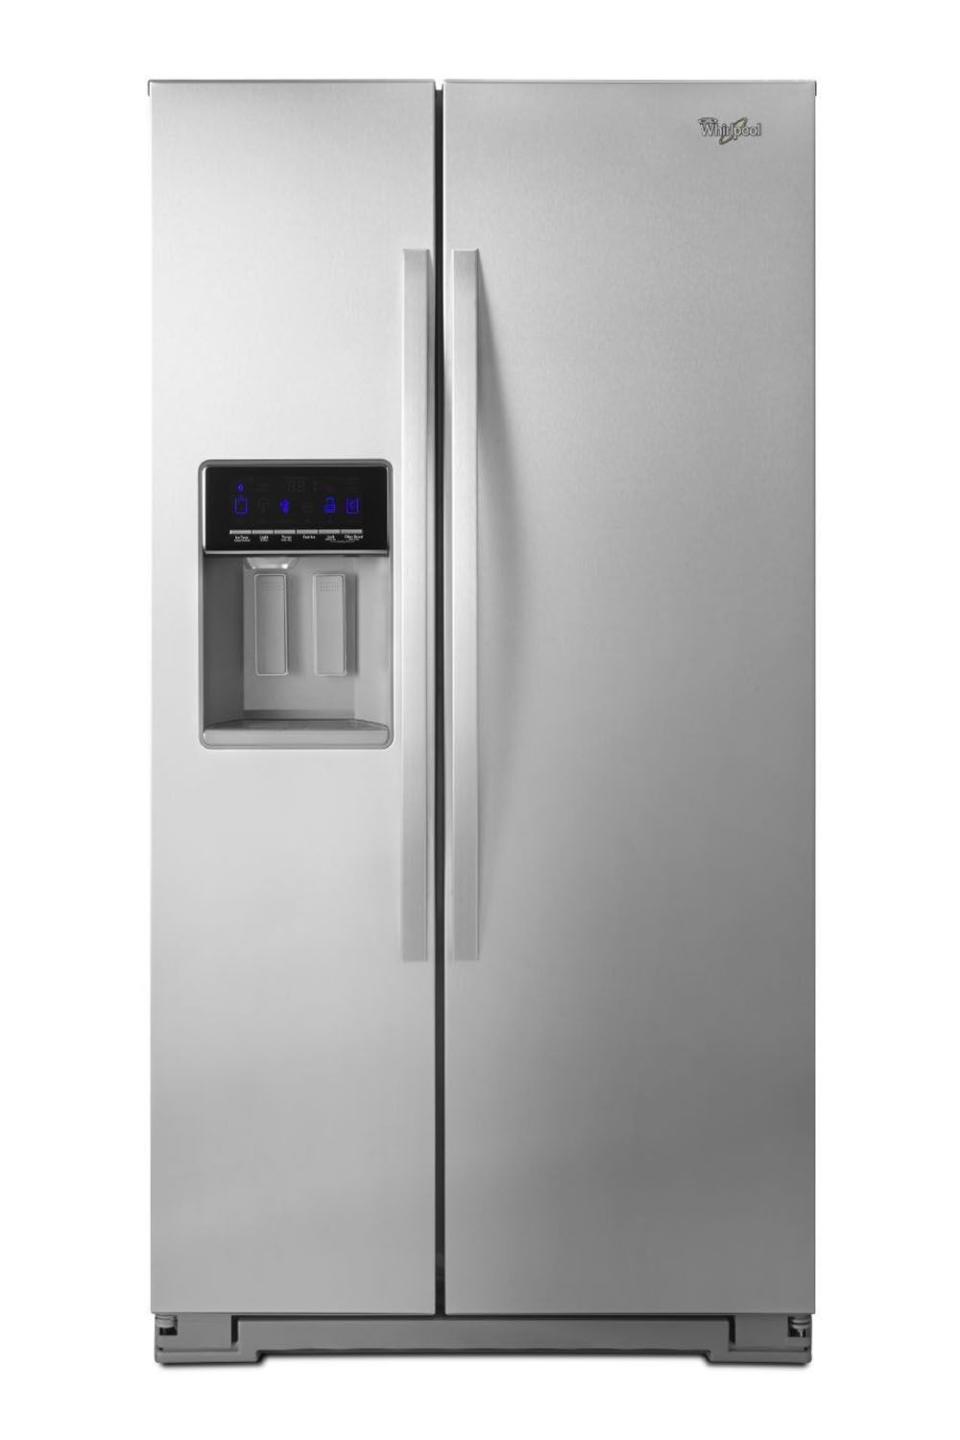 7) Whirlpool Side-by-Side Refrigerator